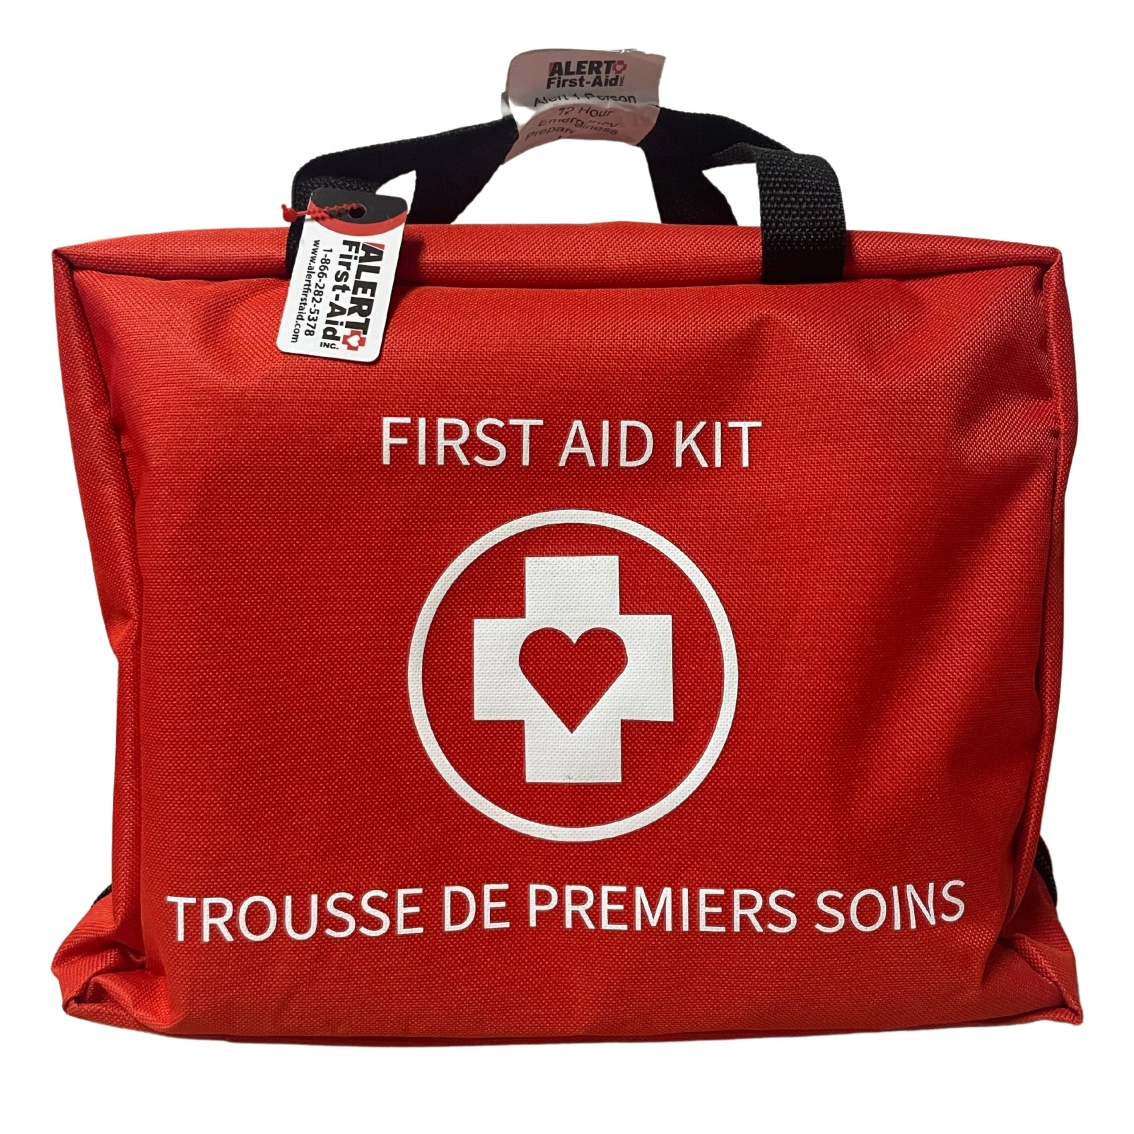 1 Person 72 Hour Emergency Preparedness Kit